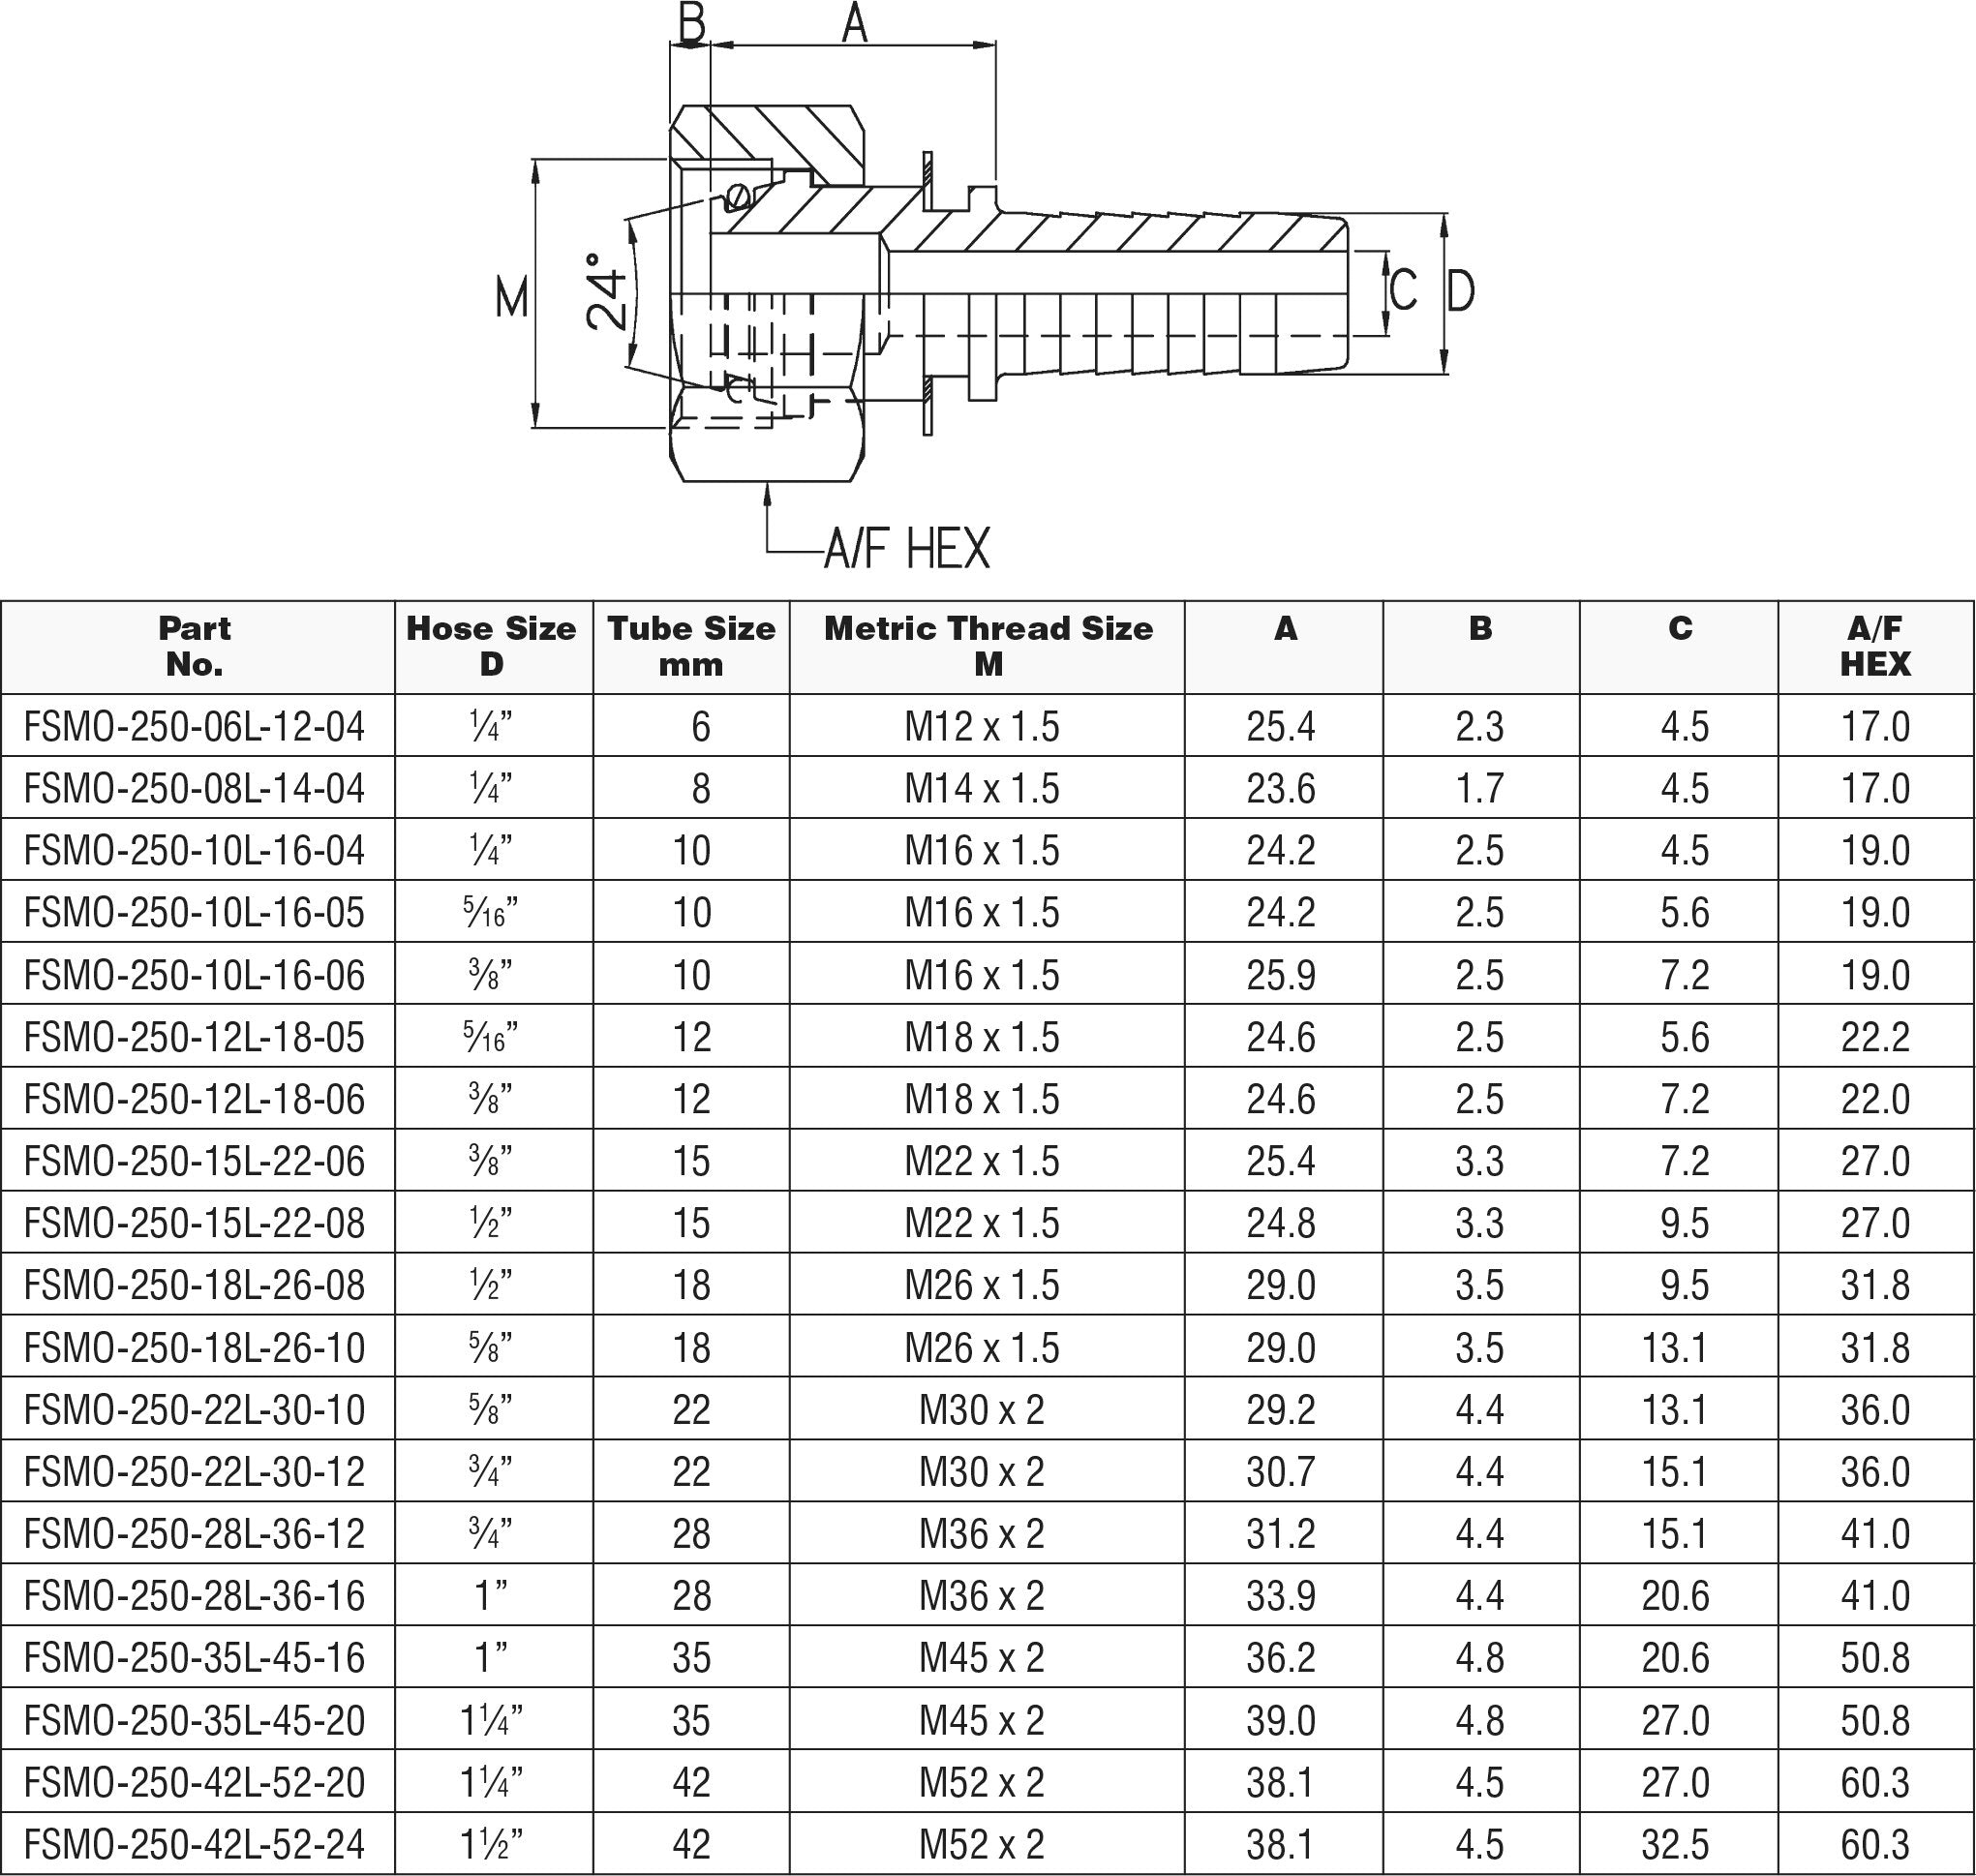 M26x1.5 (18L) O-RING SWIVEL FEMALE x 1/2" HYDRAULIC HOSETAIL-FSMO-250-18L-26-08 - Custom Fittings